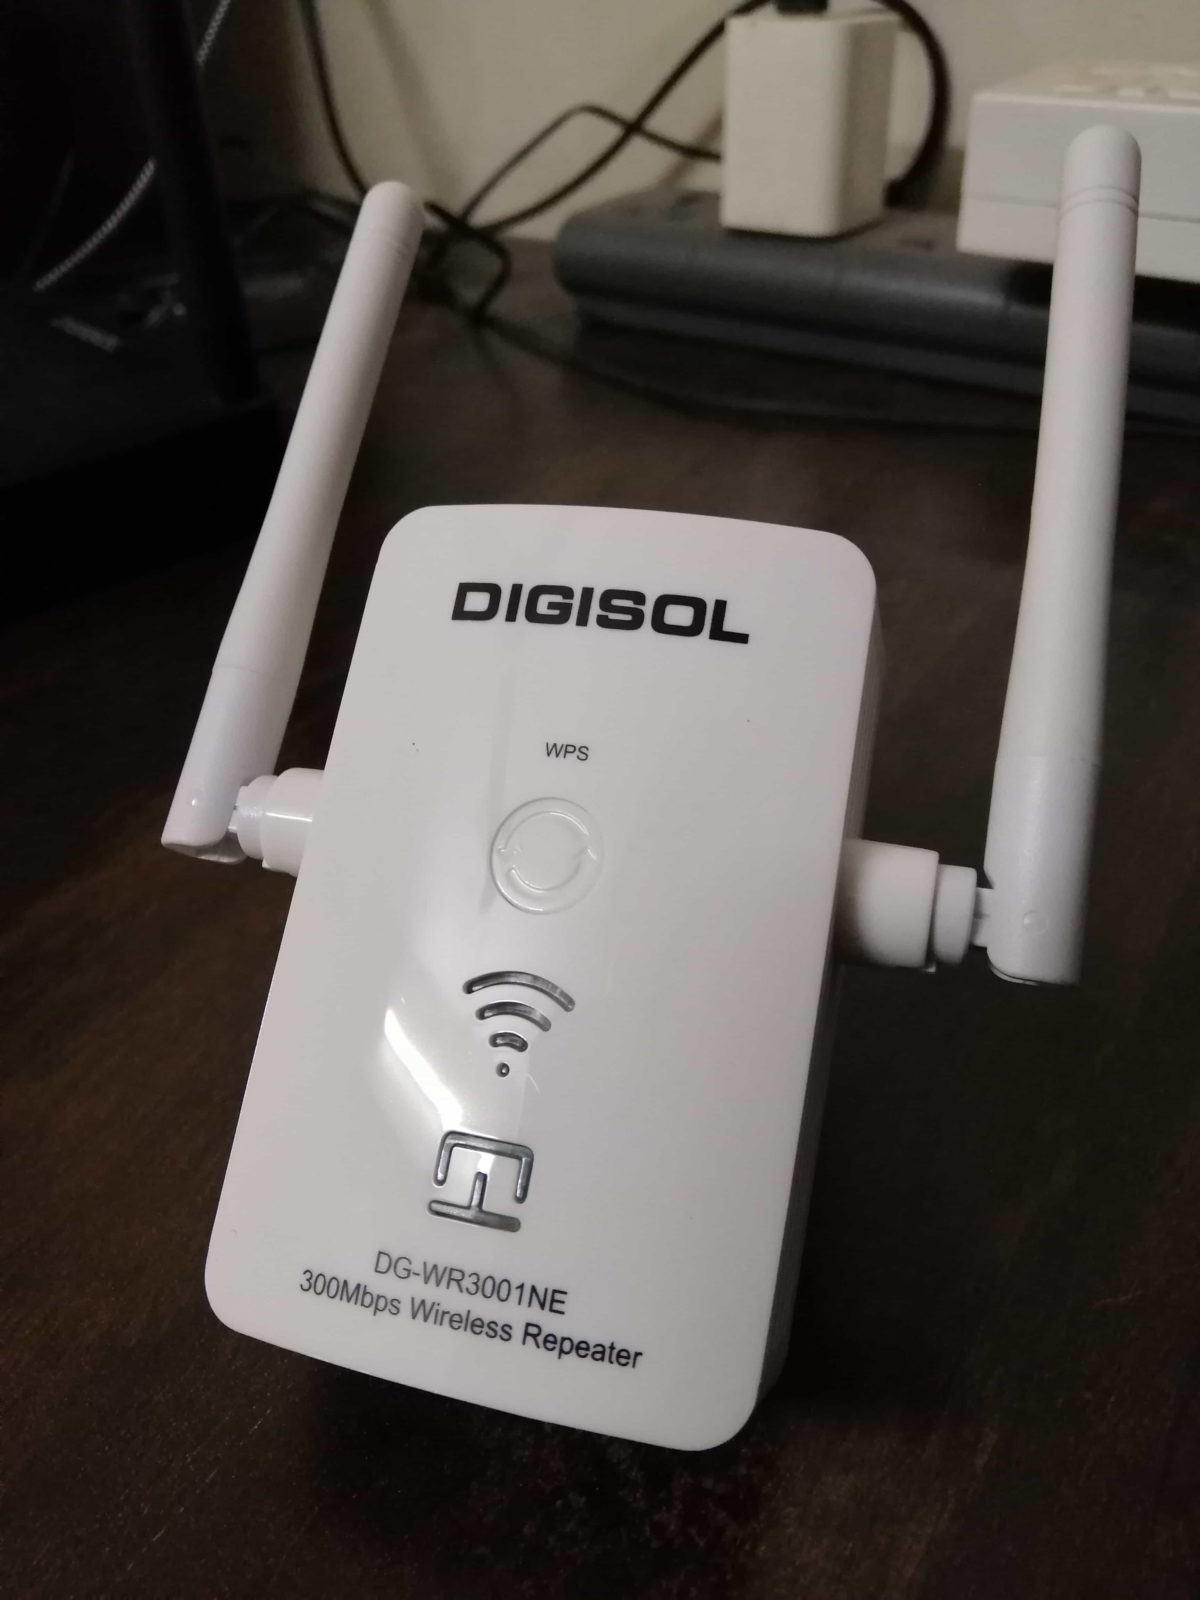 Digisol DG-WR3001NE wireless repeater review